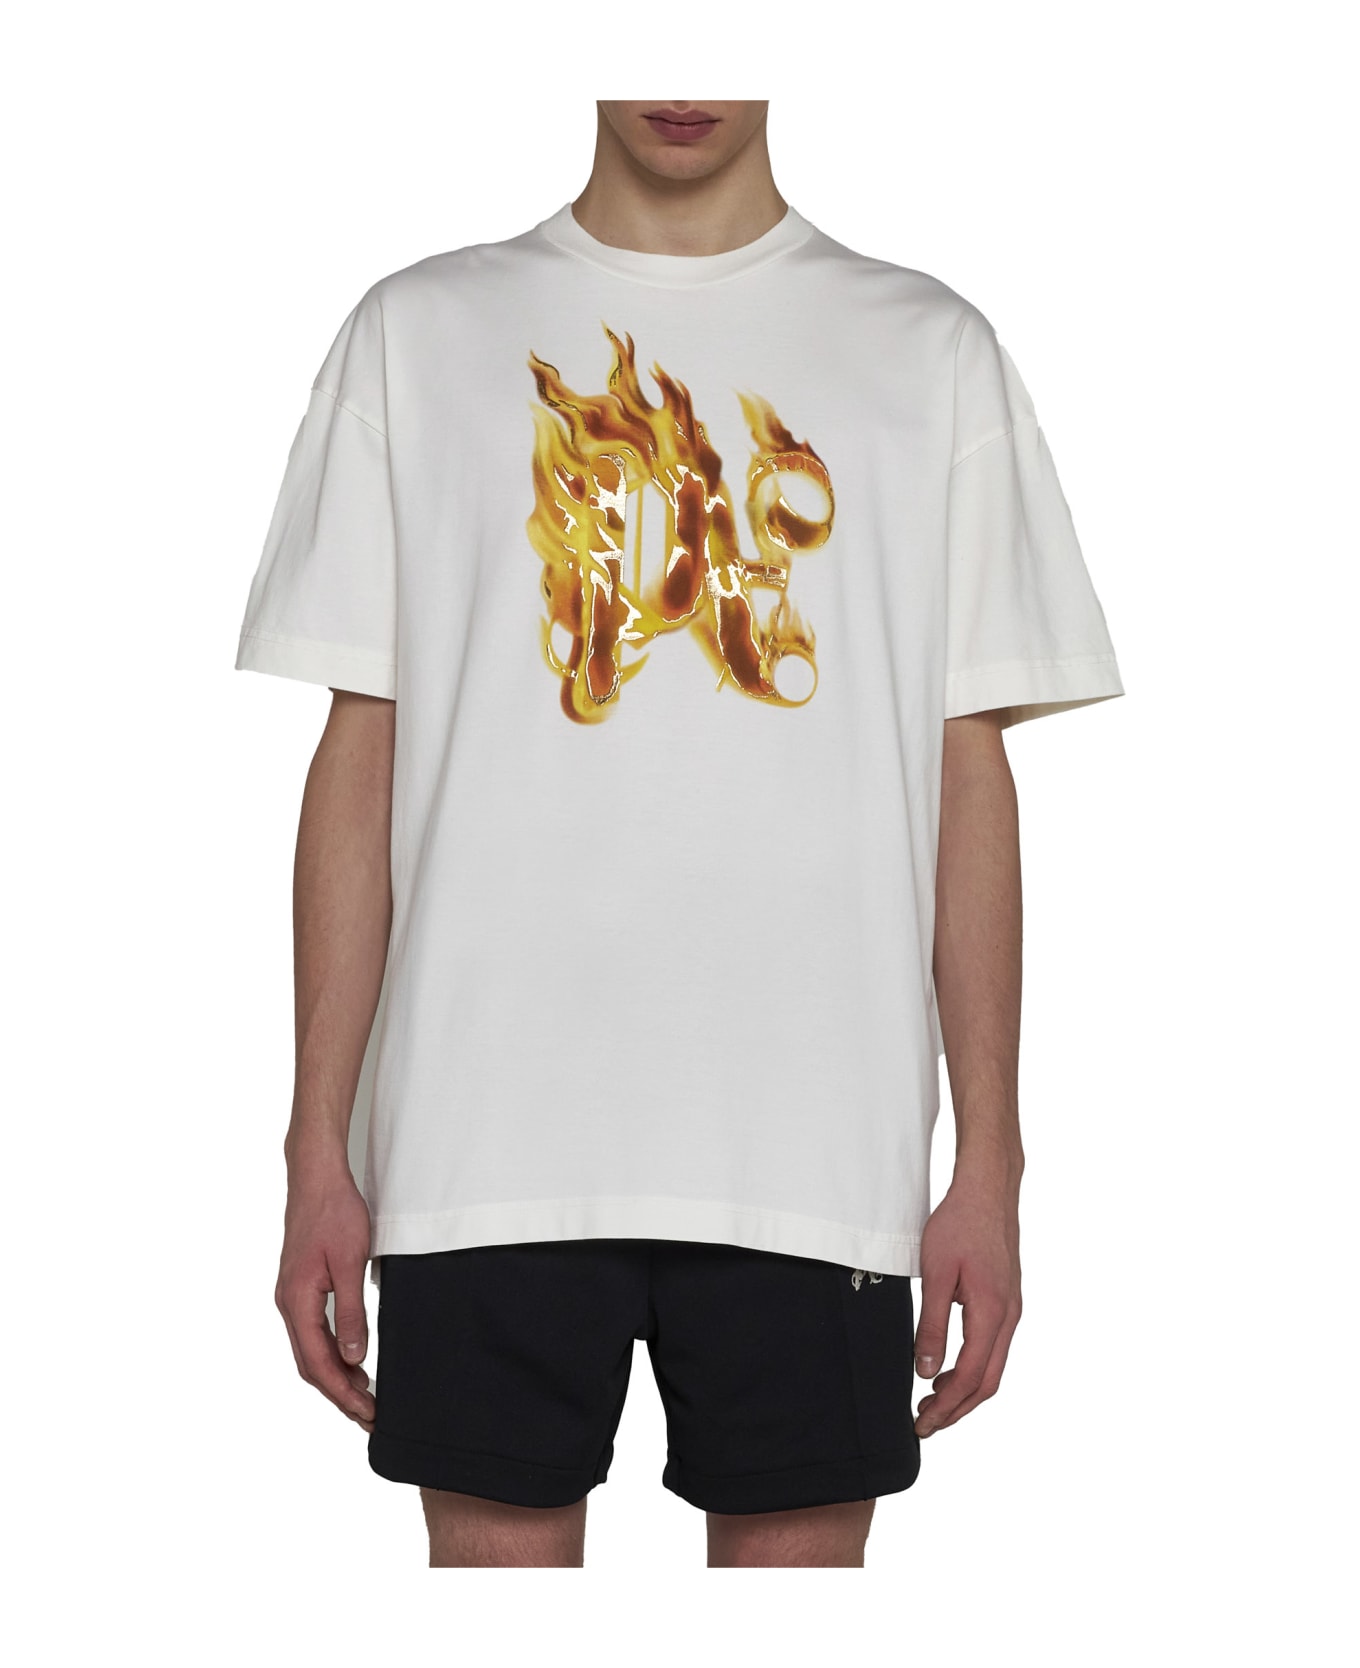 Palm Angels Burning Monogram T-shirt - Off white gold